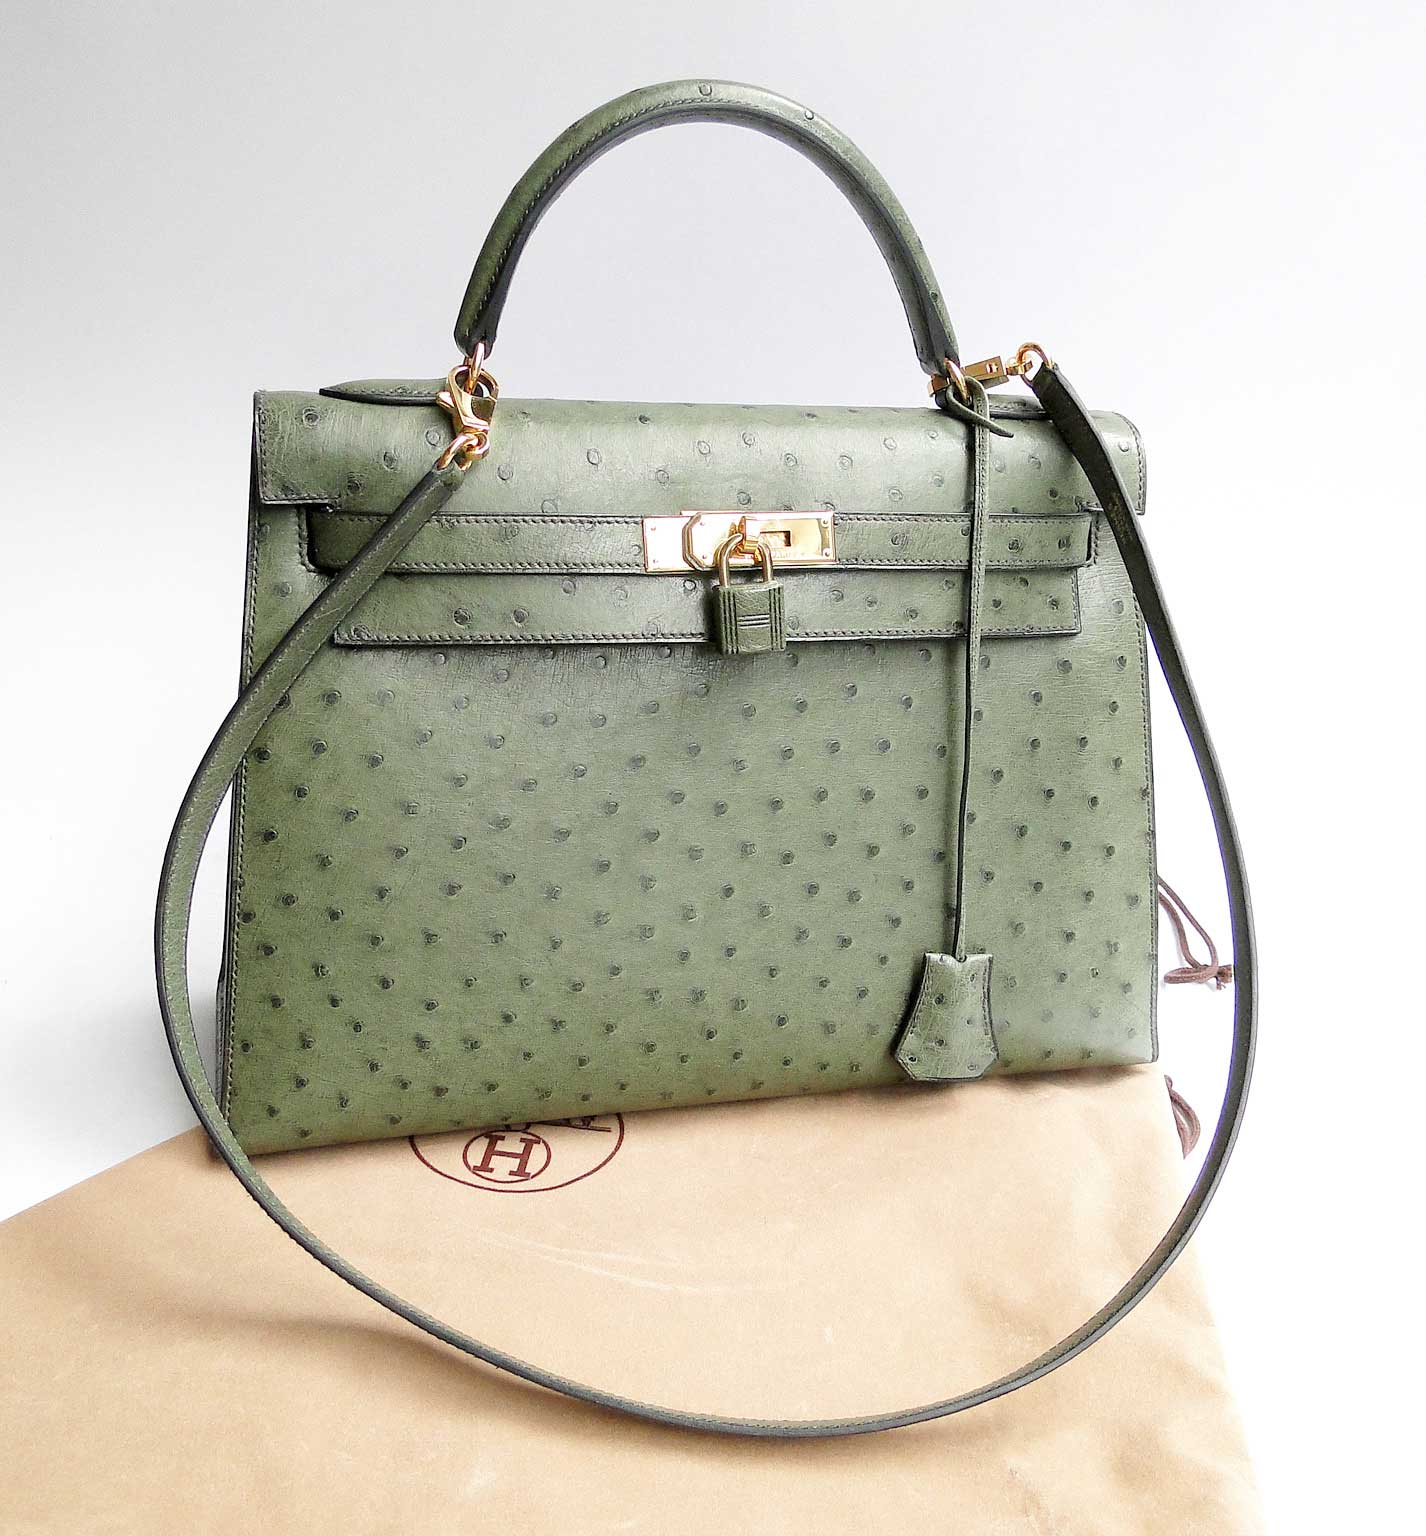 Fall Handbag Trends: Box Bags Inspired by Grace Kelly